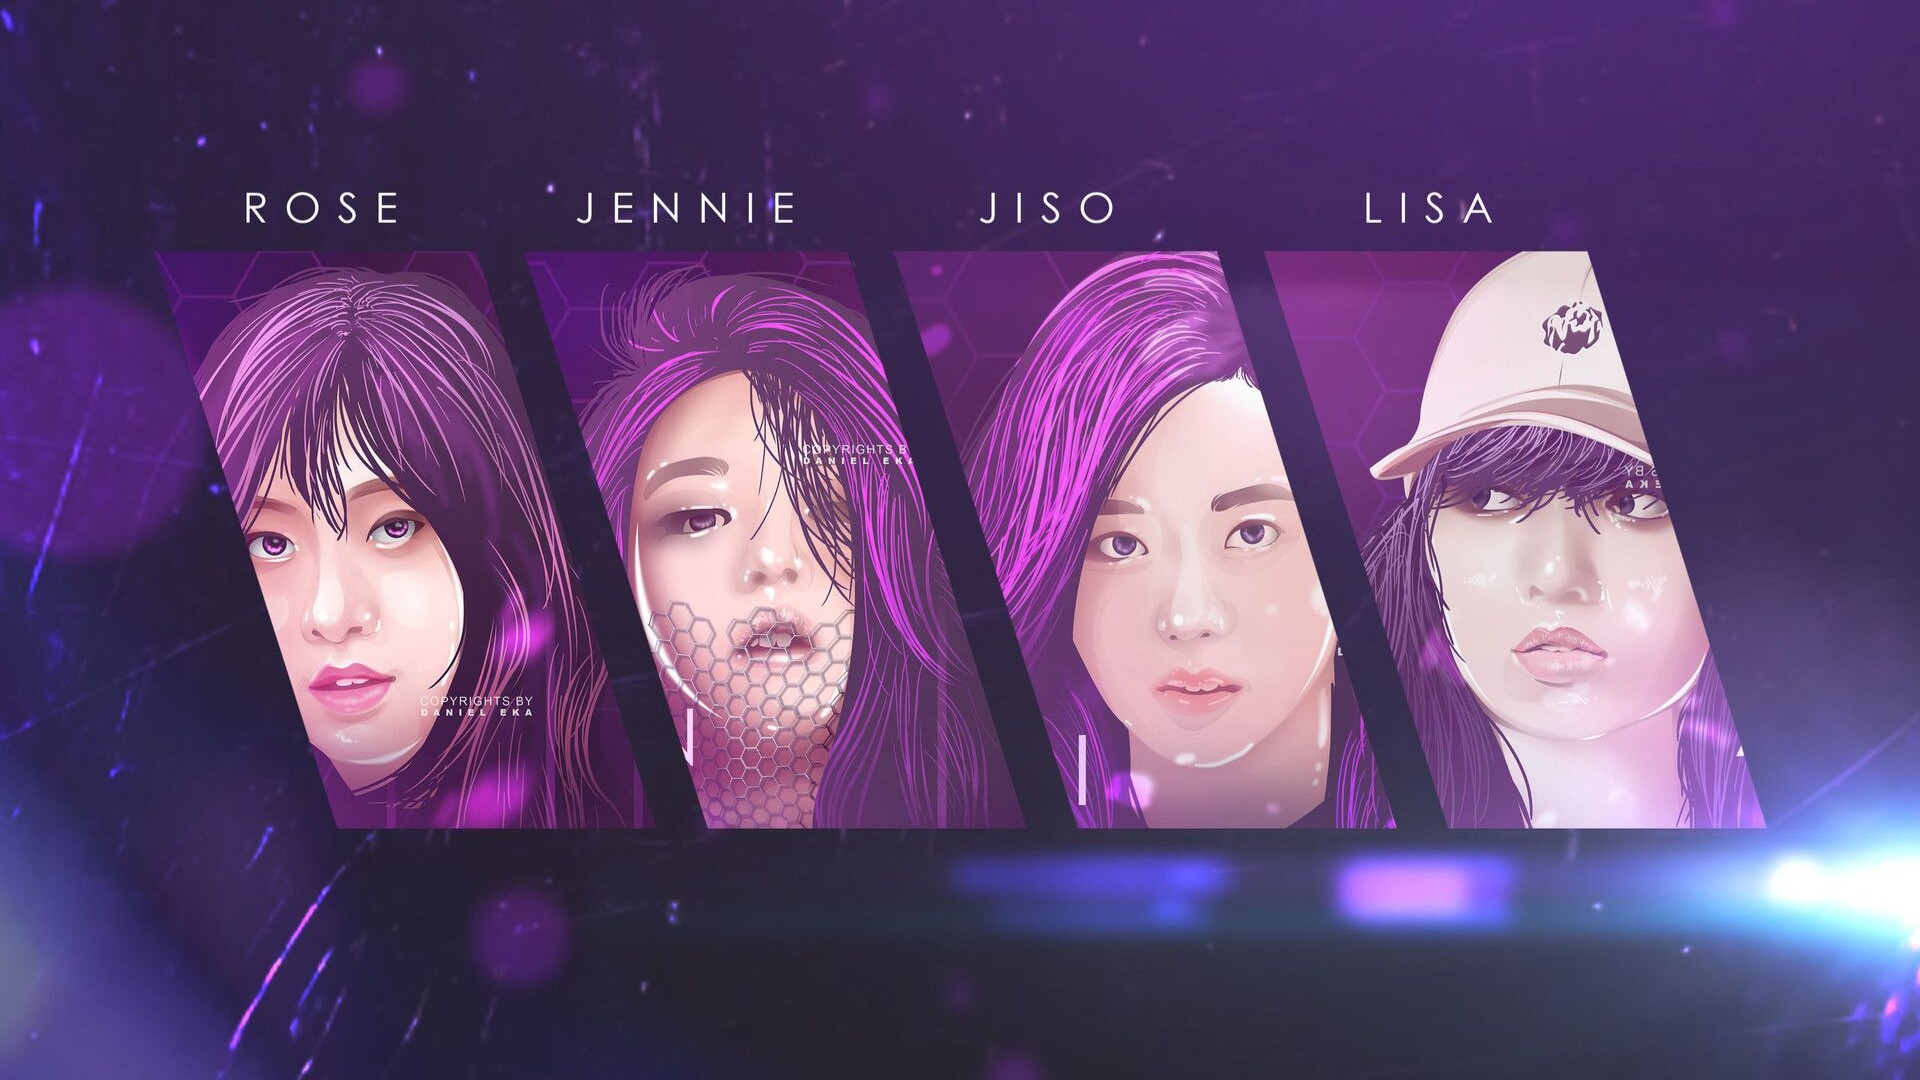 BLACKPINK: Jisoo, Jennie, Rose, and Lisa, A South Korean girl group. 1920x1080 Full HD Wallpaper.